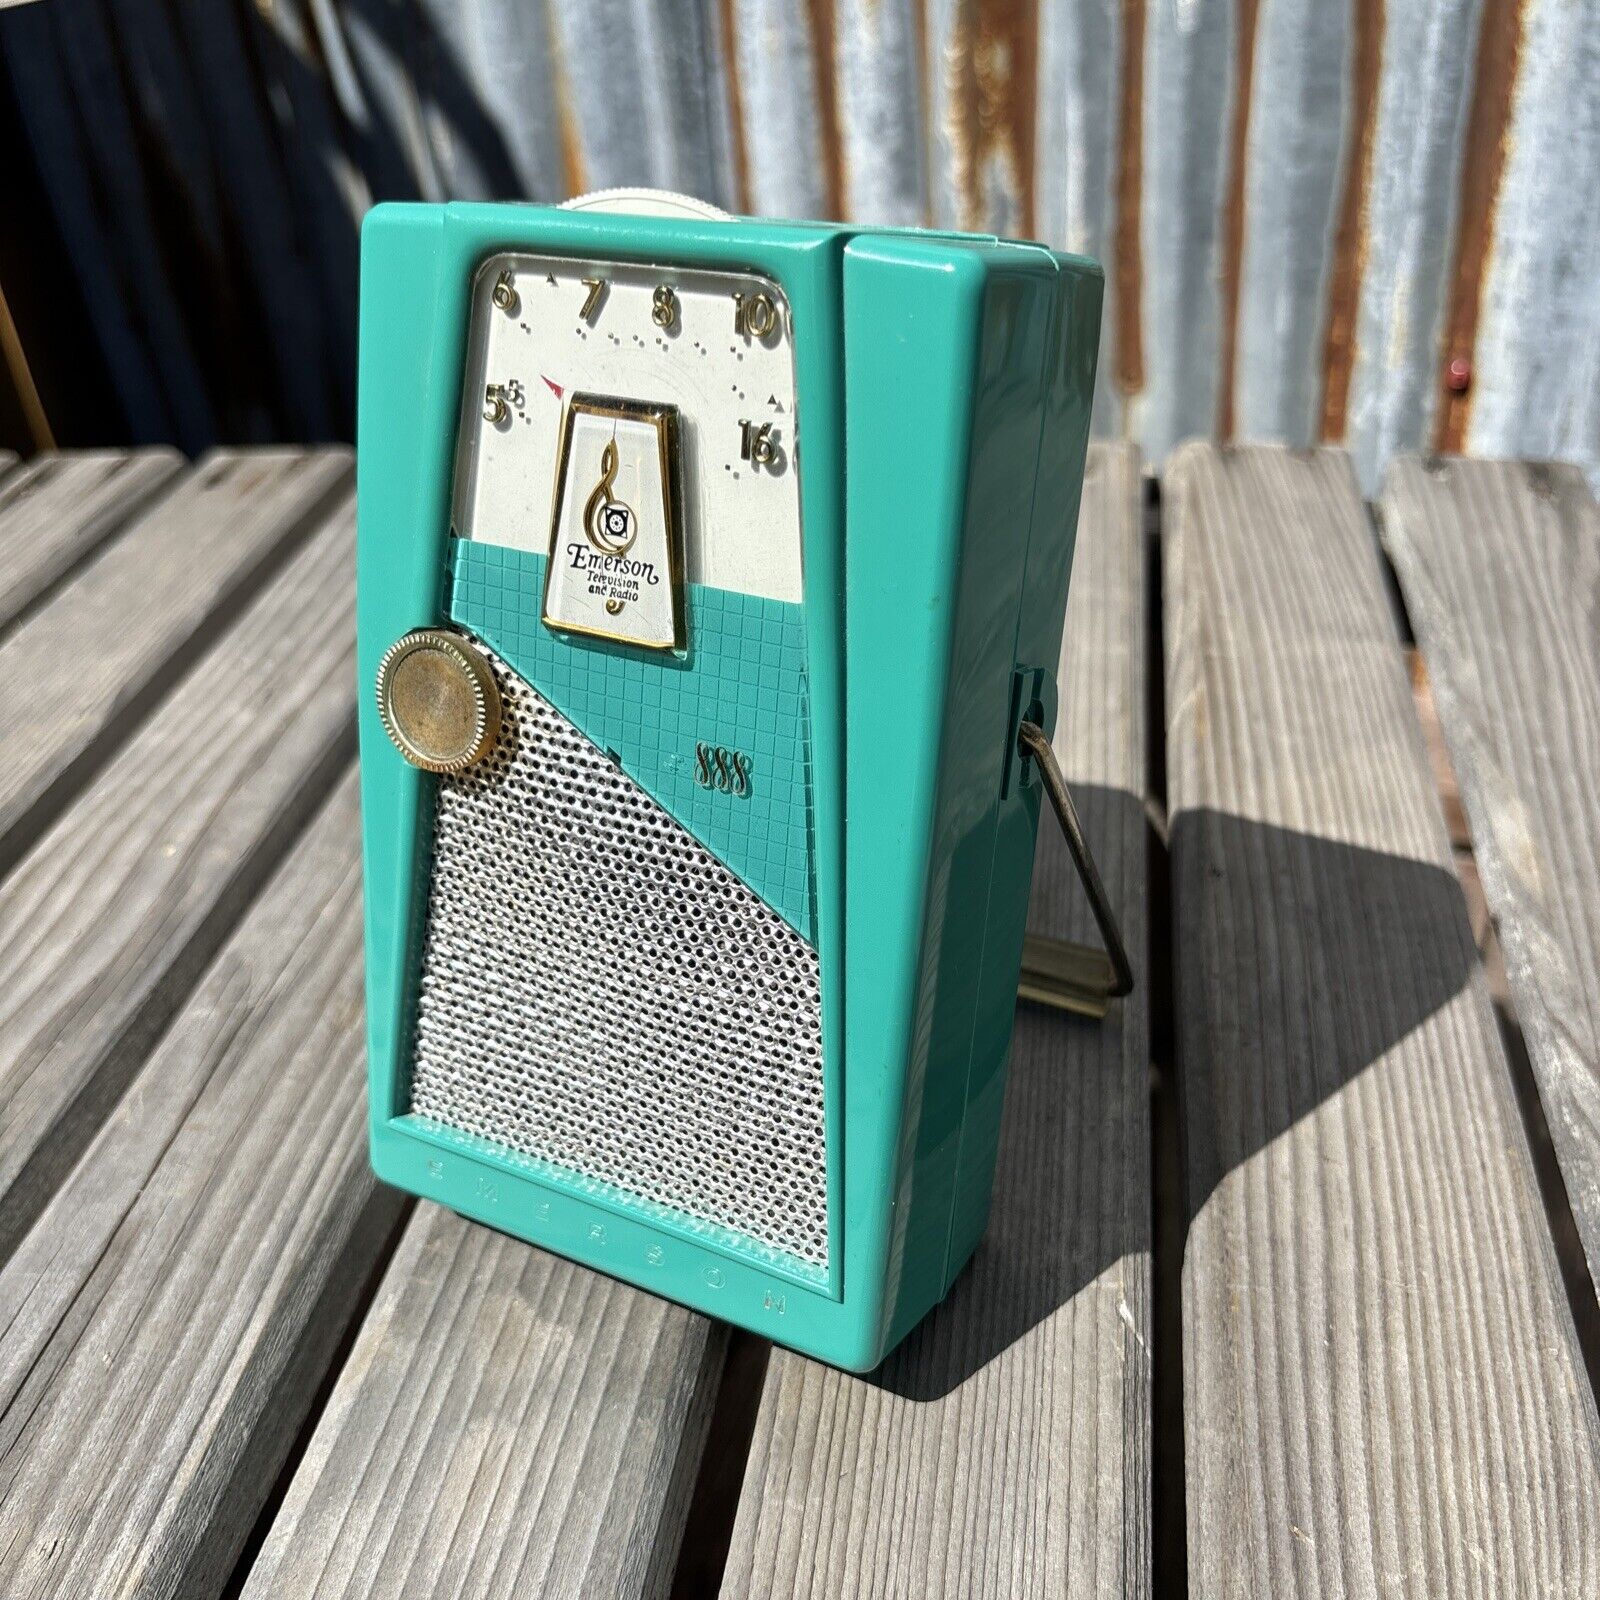 EMERSON 888 EXPLORER Transistor Radio - TEAL  - WORKS LOUD USA